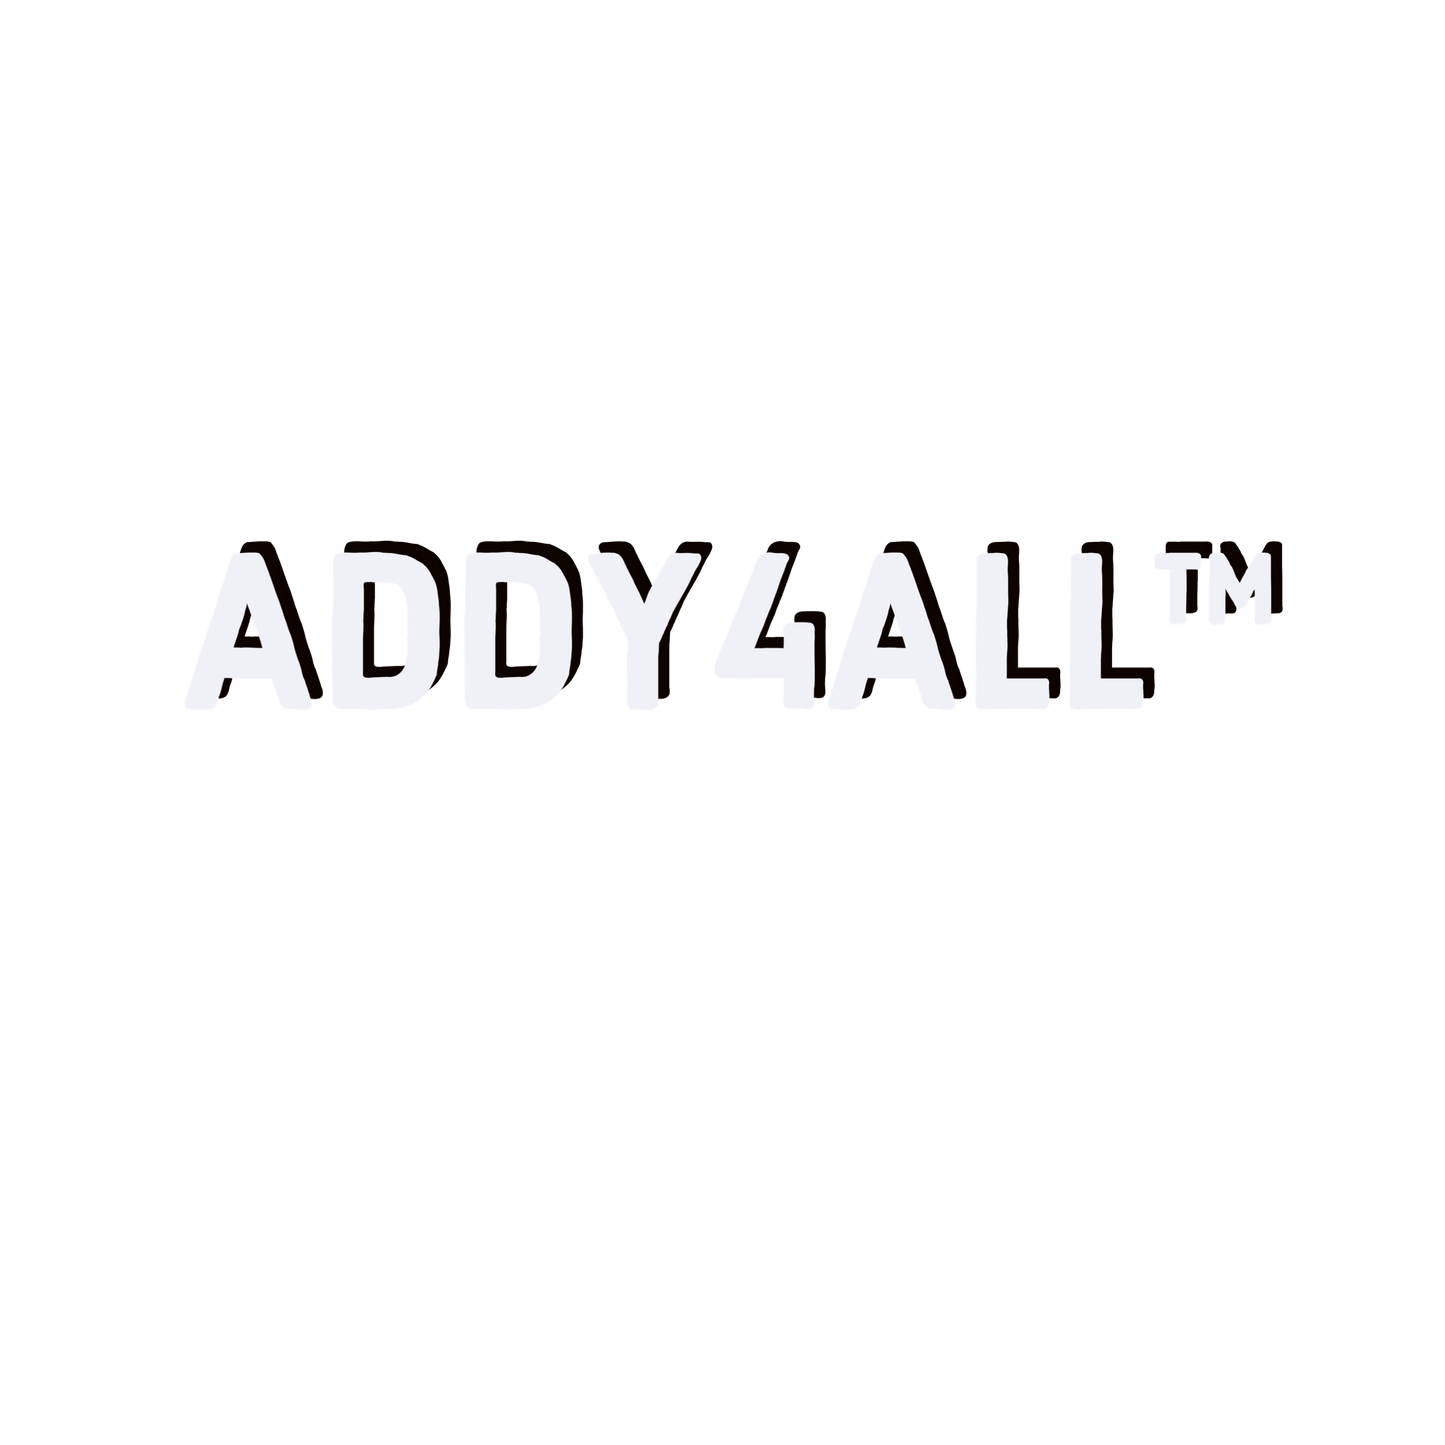 Addy4all™ 20 Caps